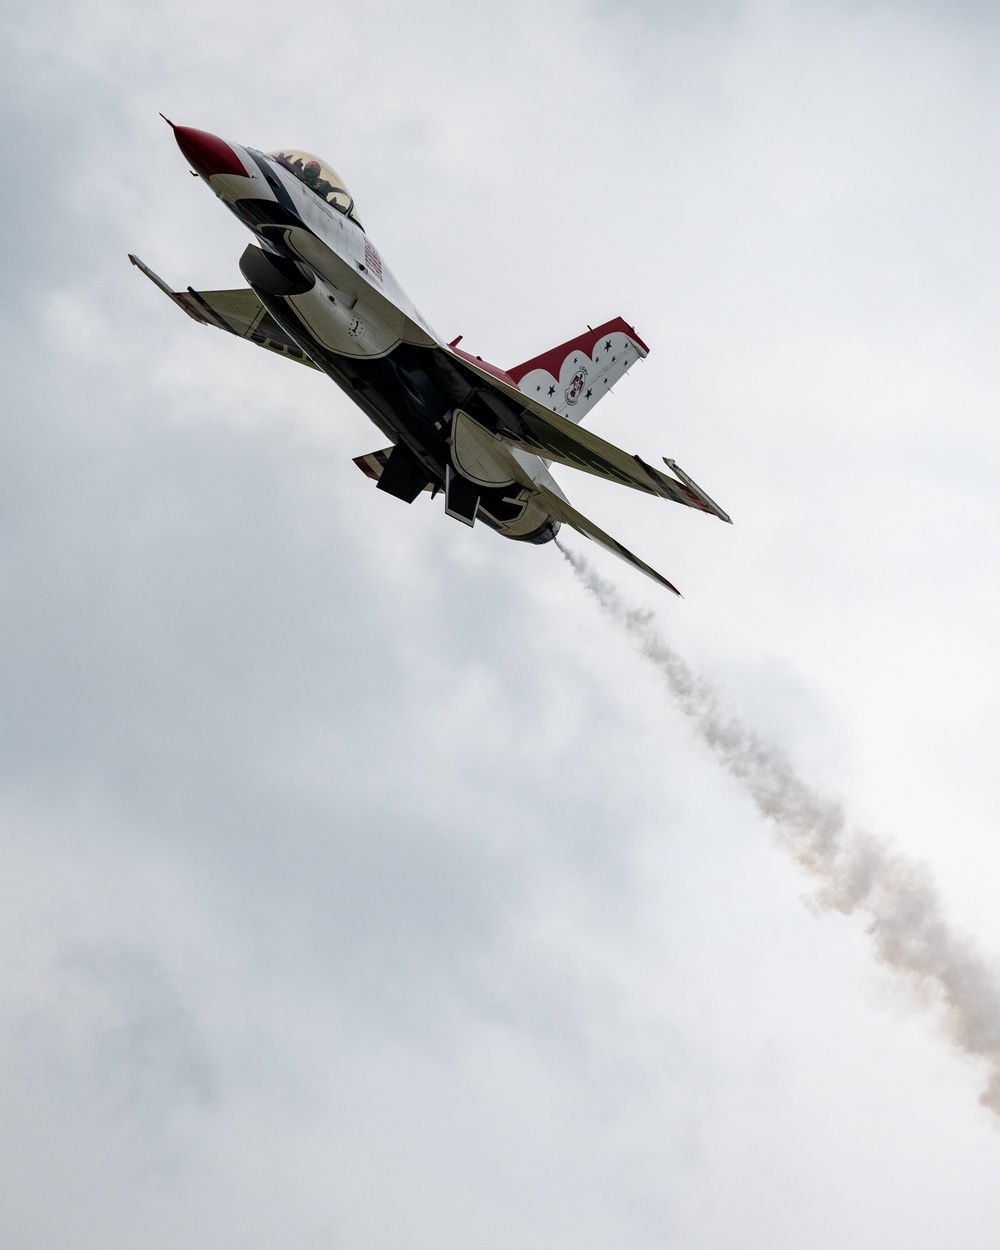 Thunderbirds dazzle at Dayton Air Show